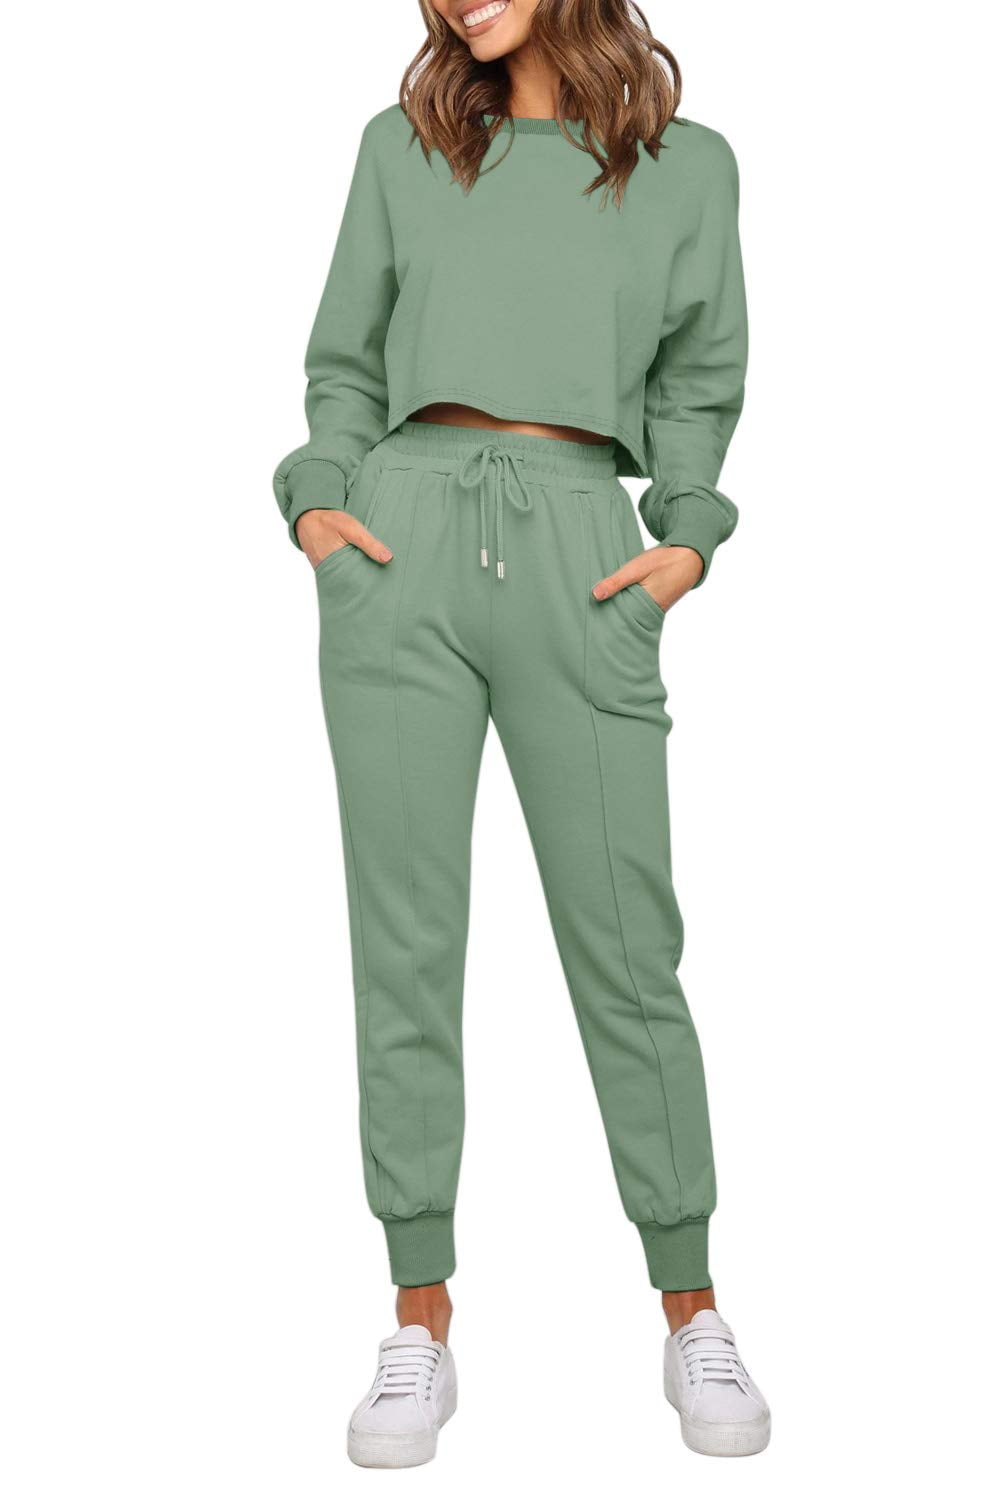 Aiyino Women's Long Sleeve Crop Top and Pants Jogger Set 2 Piece Loungewear Causal Hoodie Sweatsuits - image 1 of 6